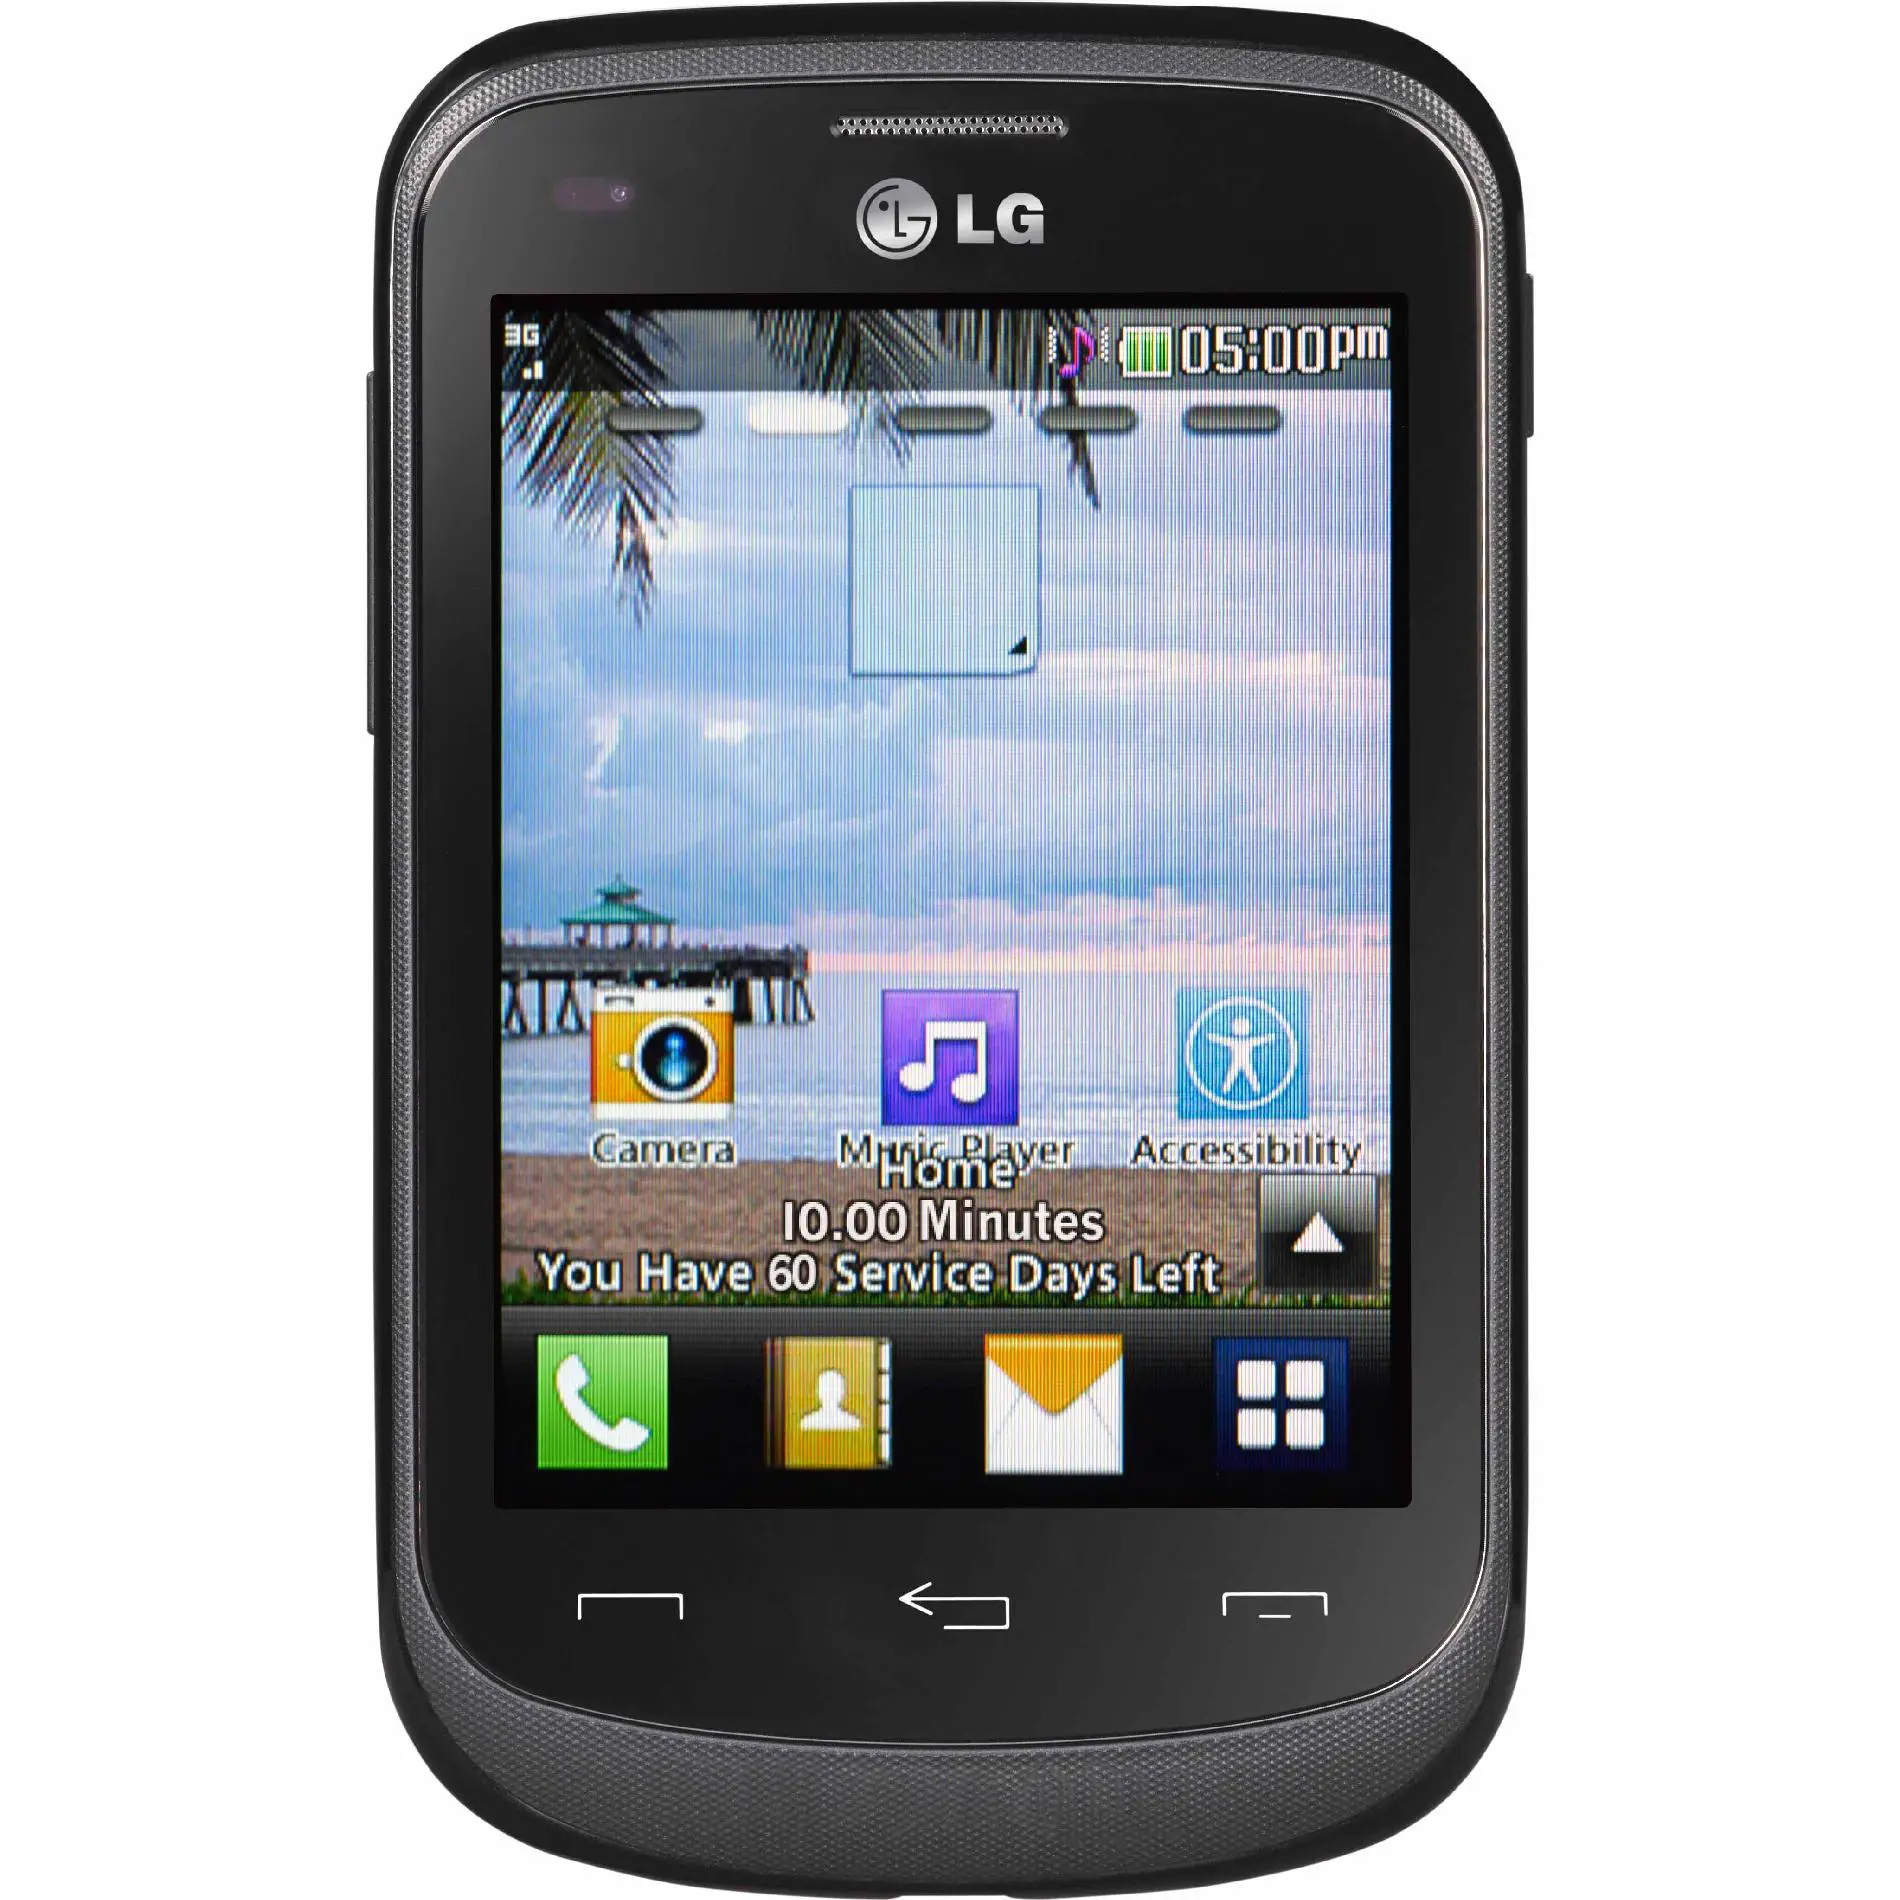 NET10 NTLG305CP LG 305C Smartphone